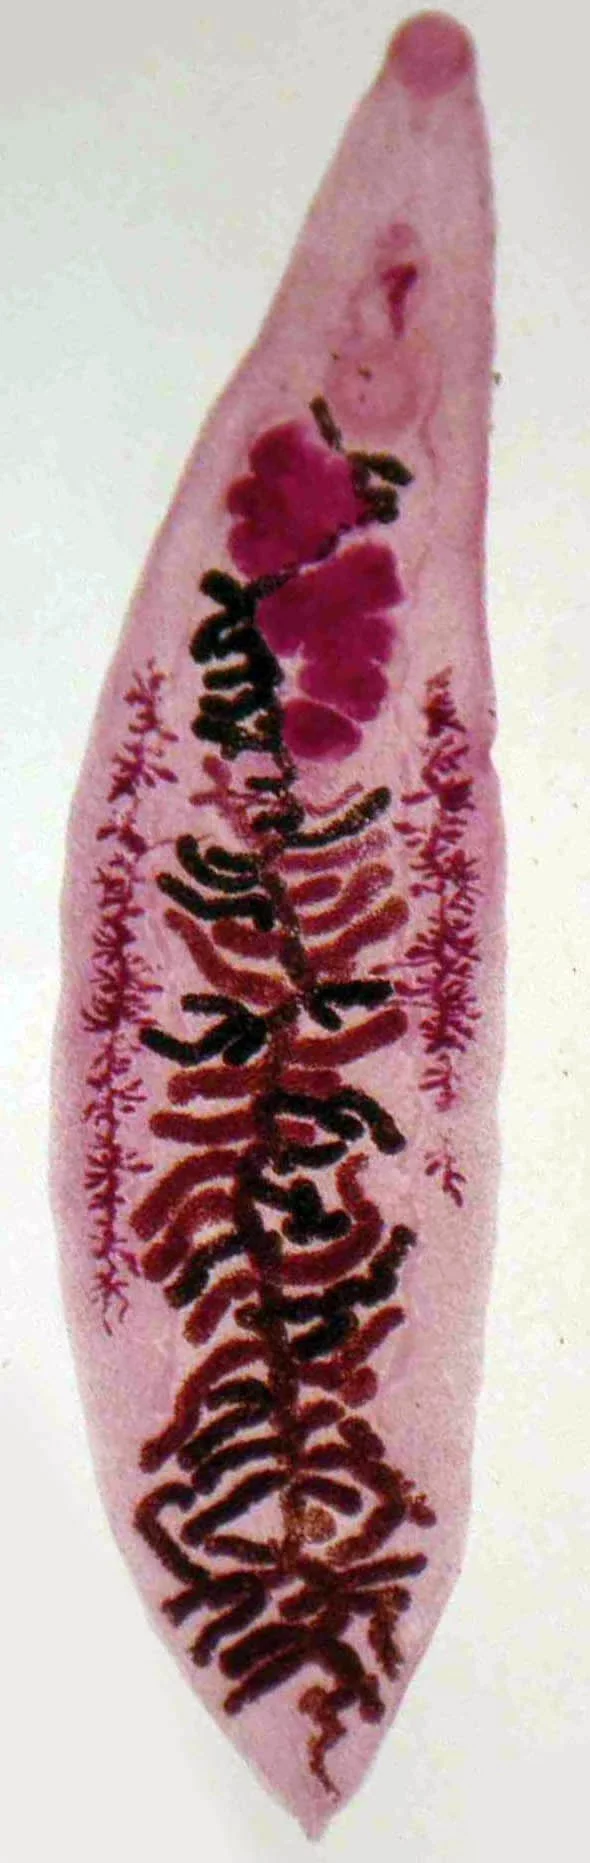 Dicrocoelium lanceatum (марита)